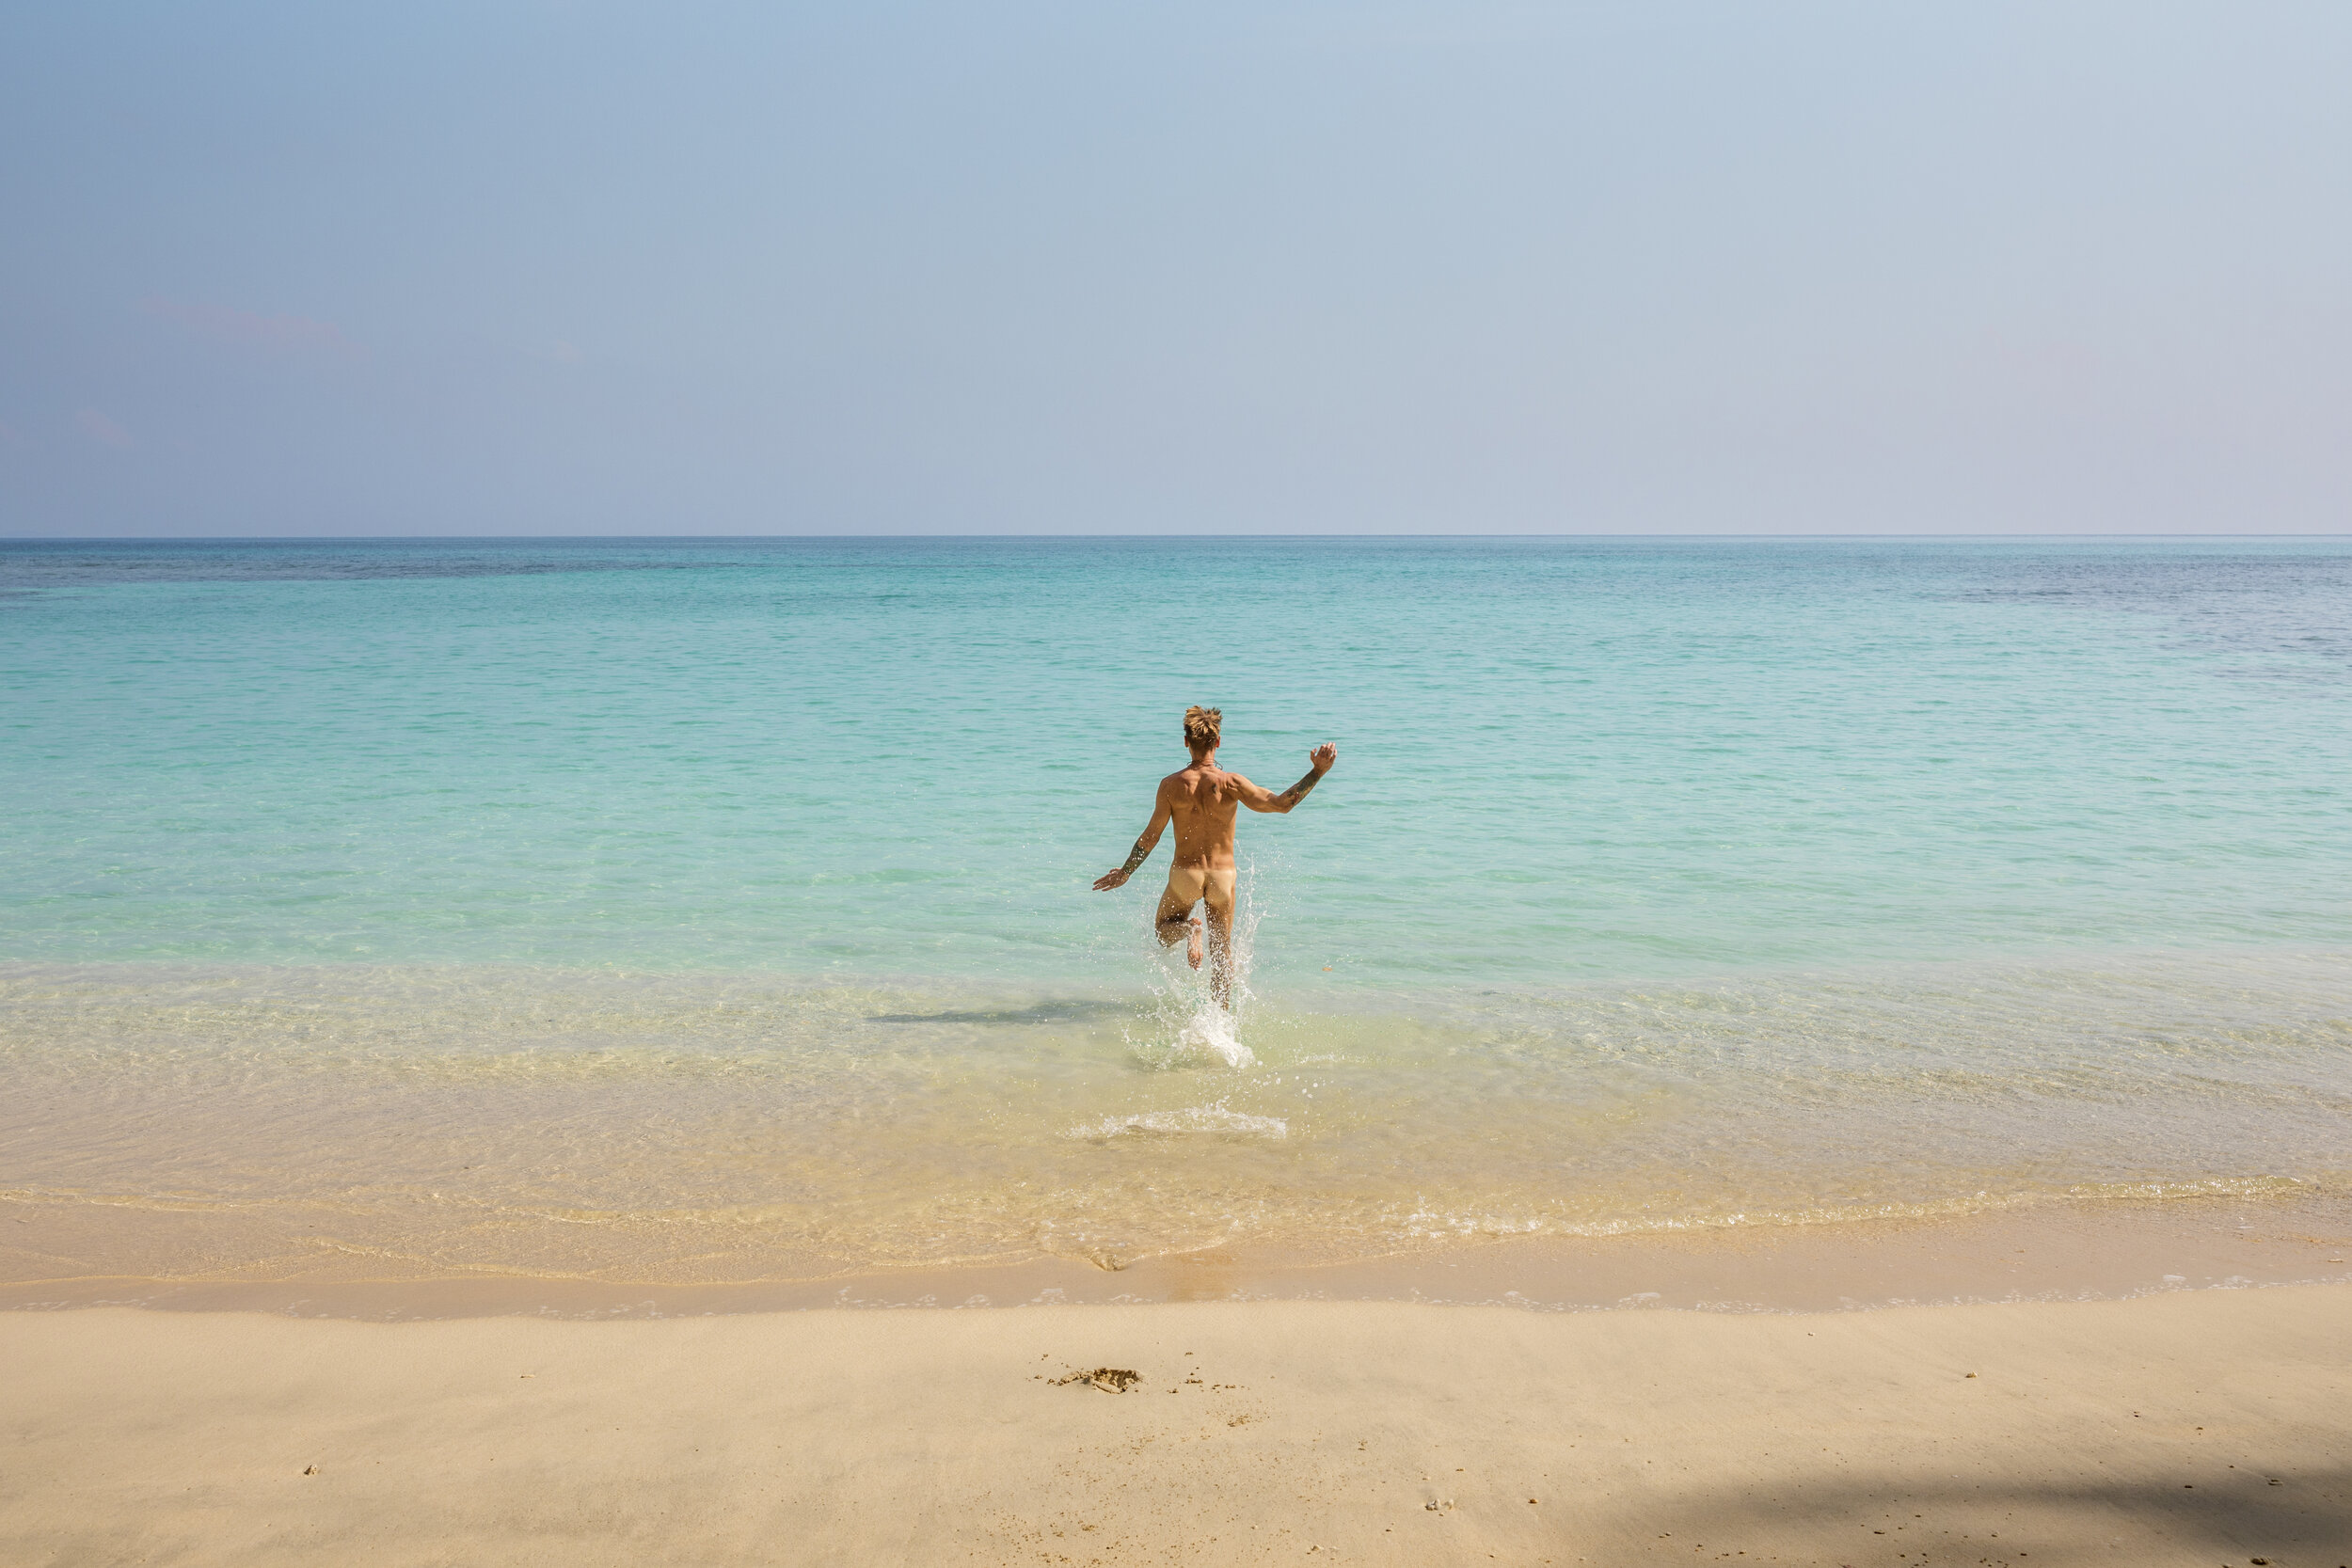  A nudist swimmer at the beach at Havelock Island, Andaman / India. 